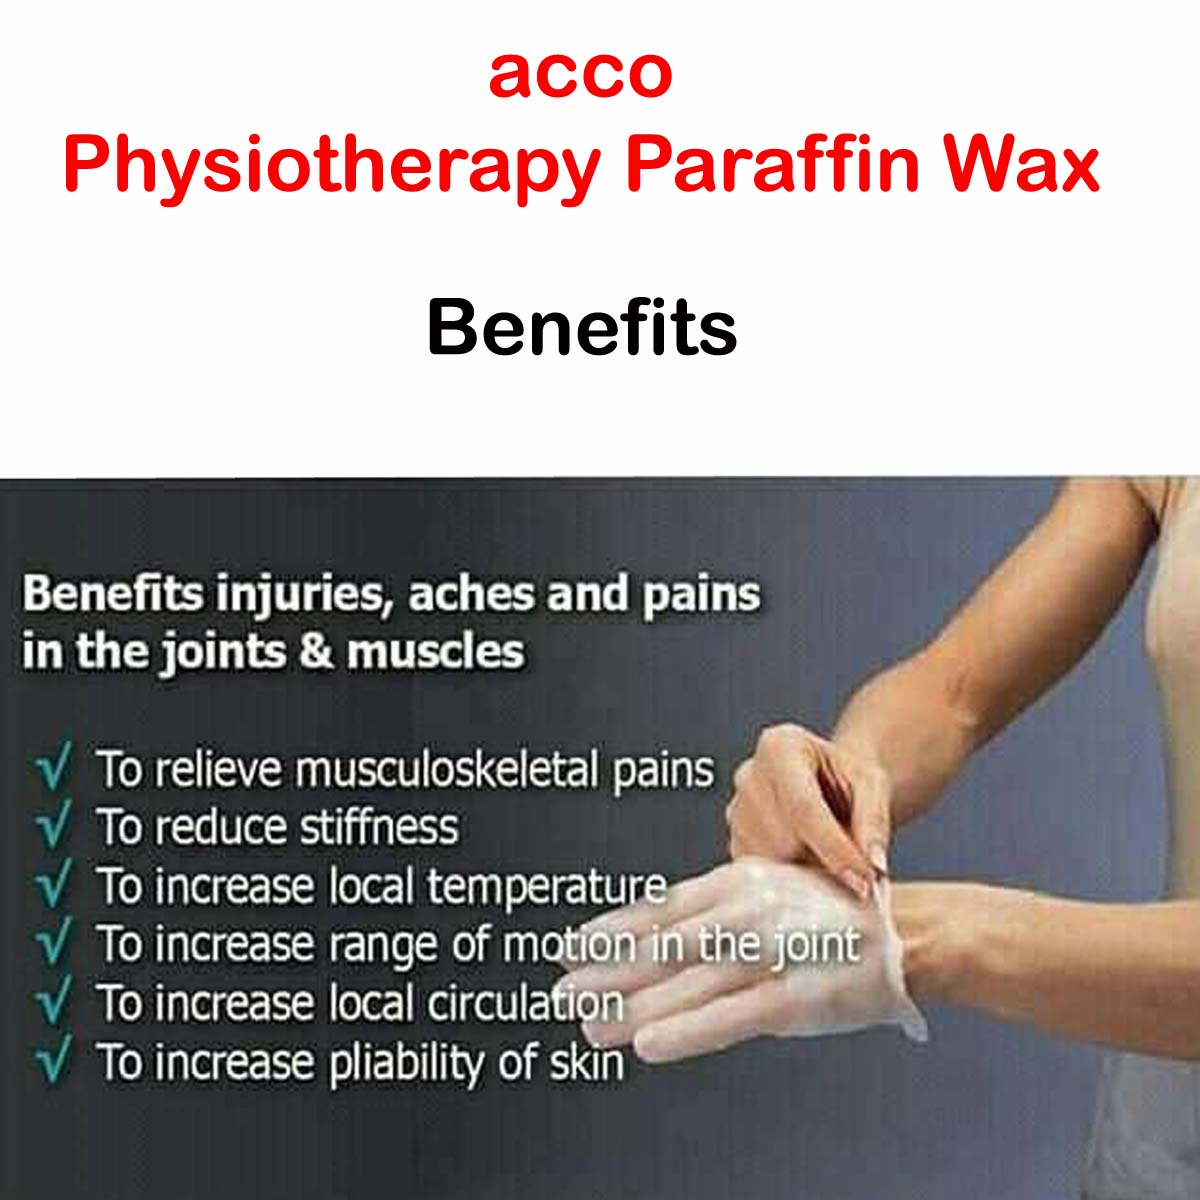 Acco Physio Wax - Paraffin Wax